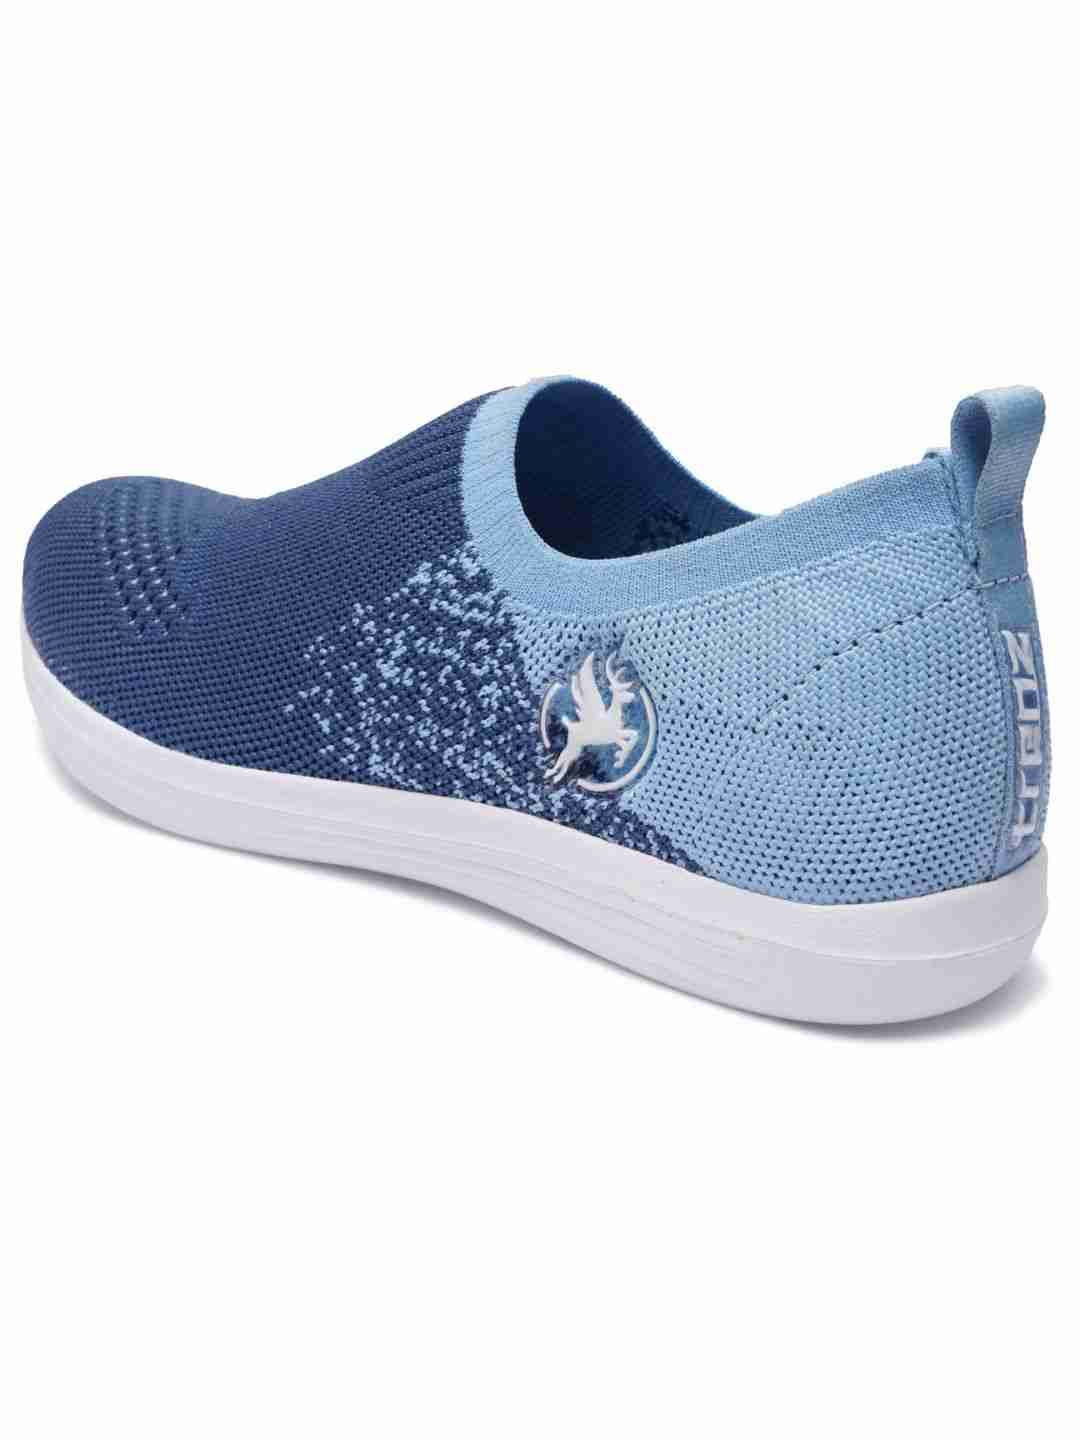 Trenz Marina Light Blue Women Walking Shoes